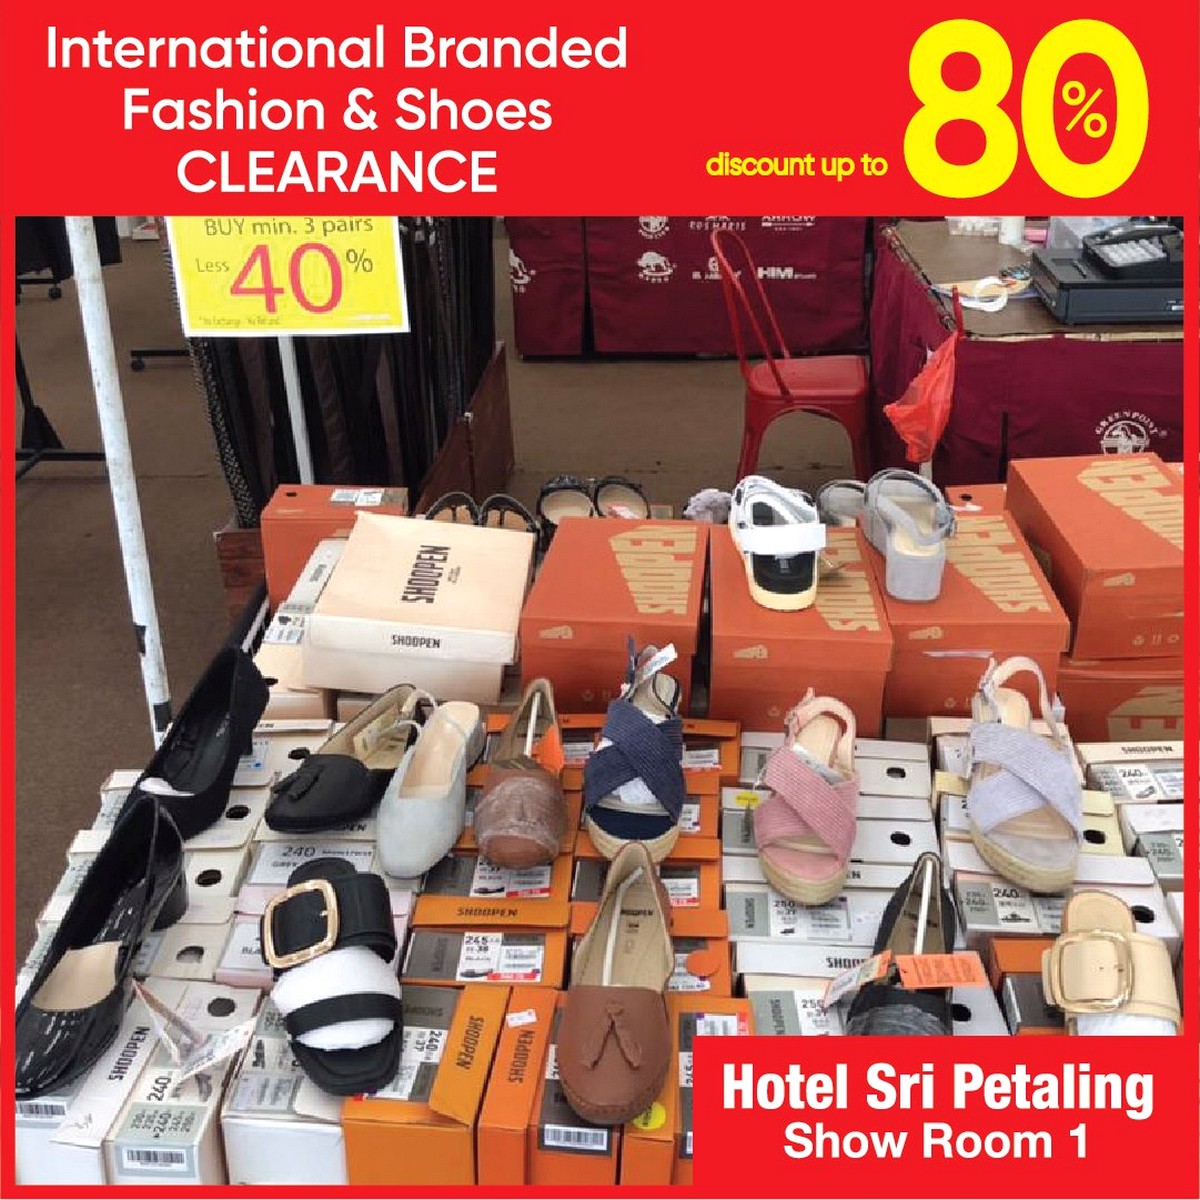 Hotel-Sri-Petaling-Warehouse-Sale-2021-11 - Apparels Fashion Accessories Fashion Lifestyle & Department Store Kuala Lumpur Selangor Warehouse Sale & Clearance in Malaysia 